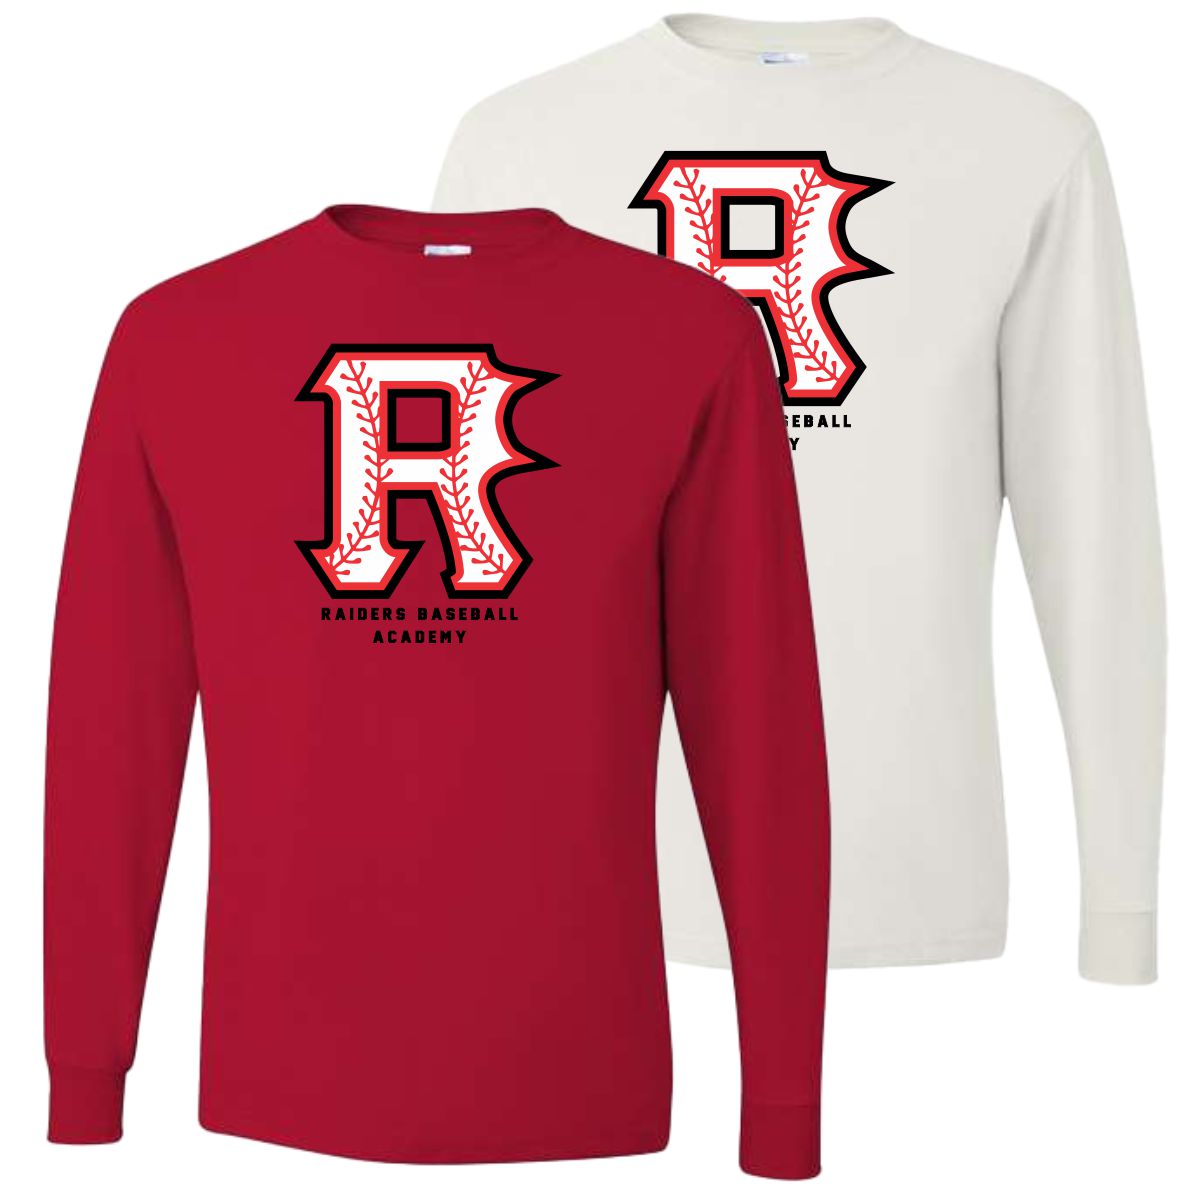 Raiders Baseball Academy Adult & Youth Long Sleeve T-Shirt ...